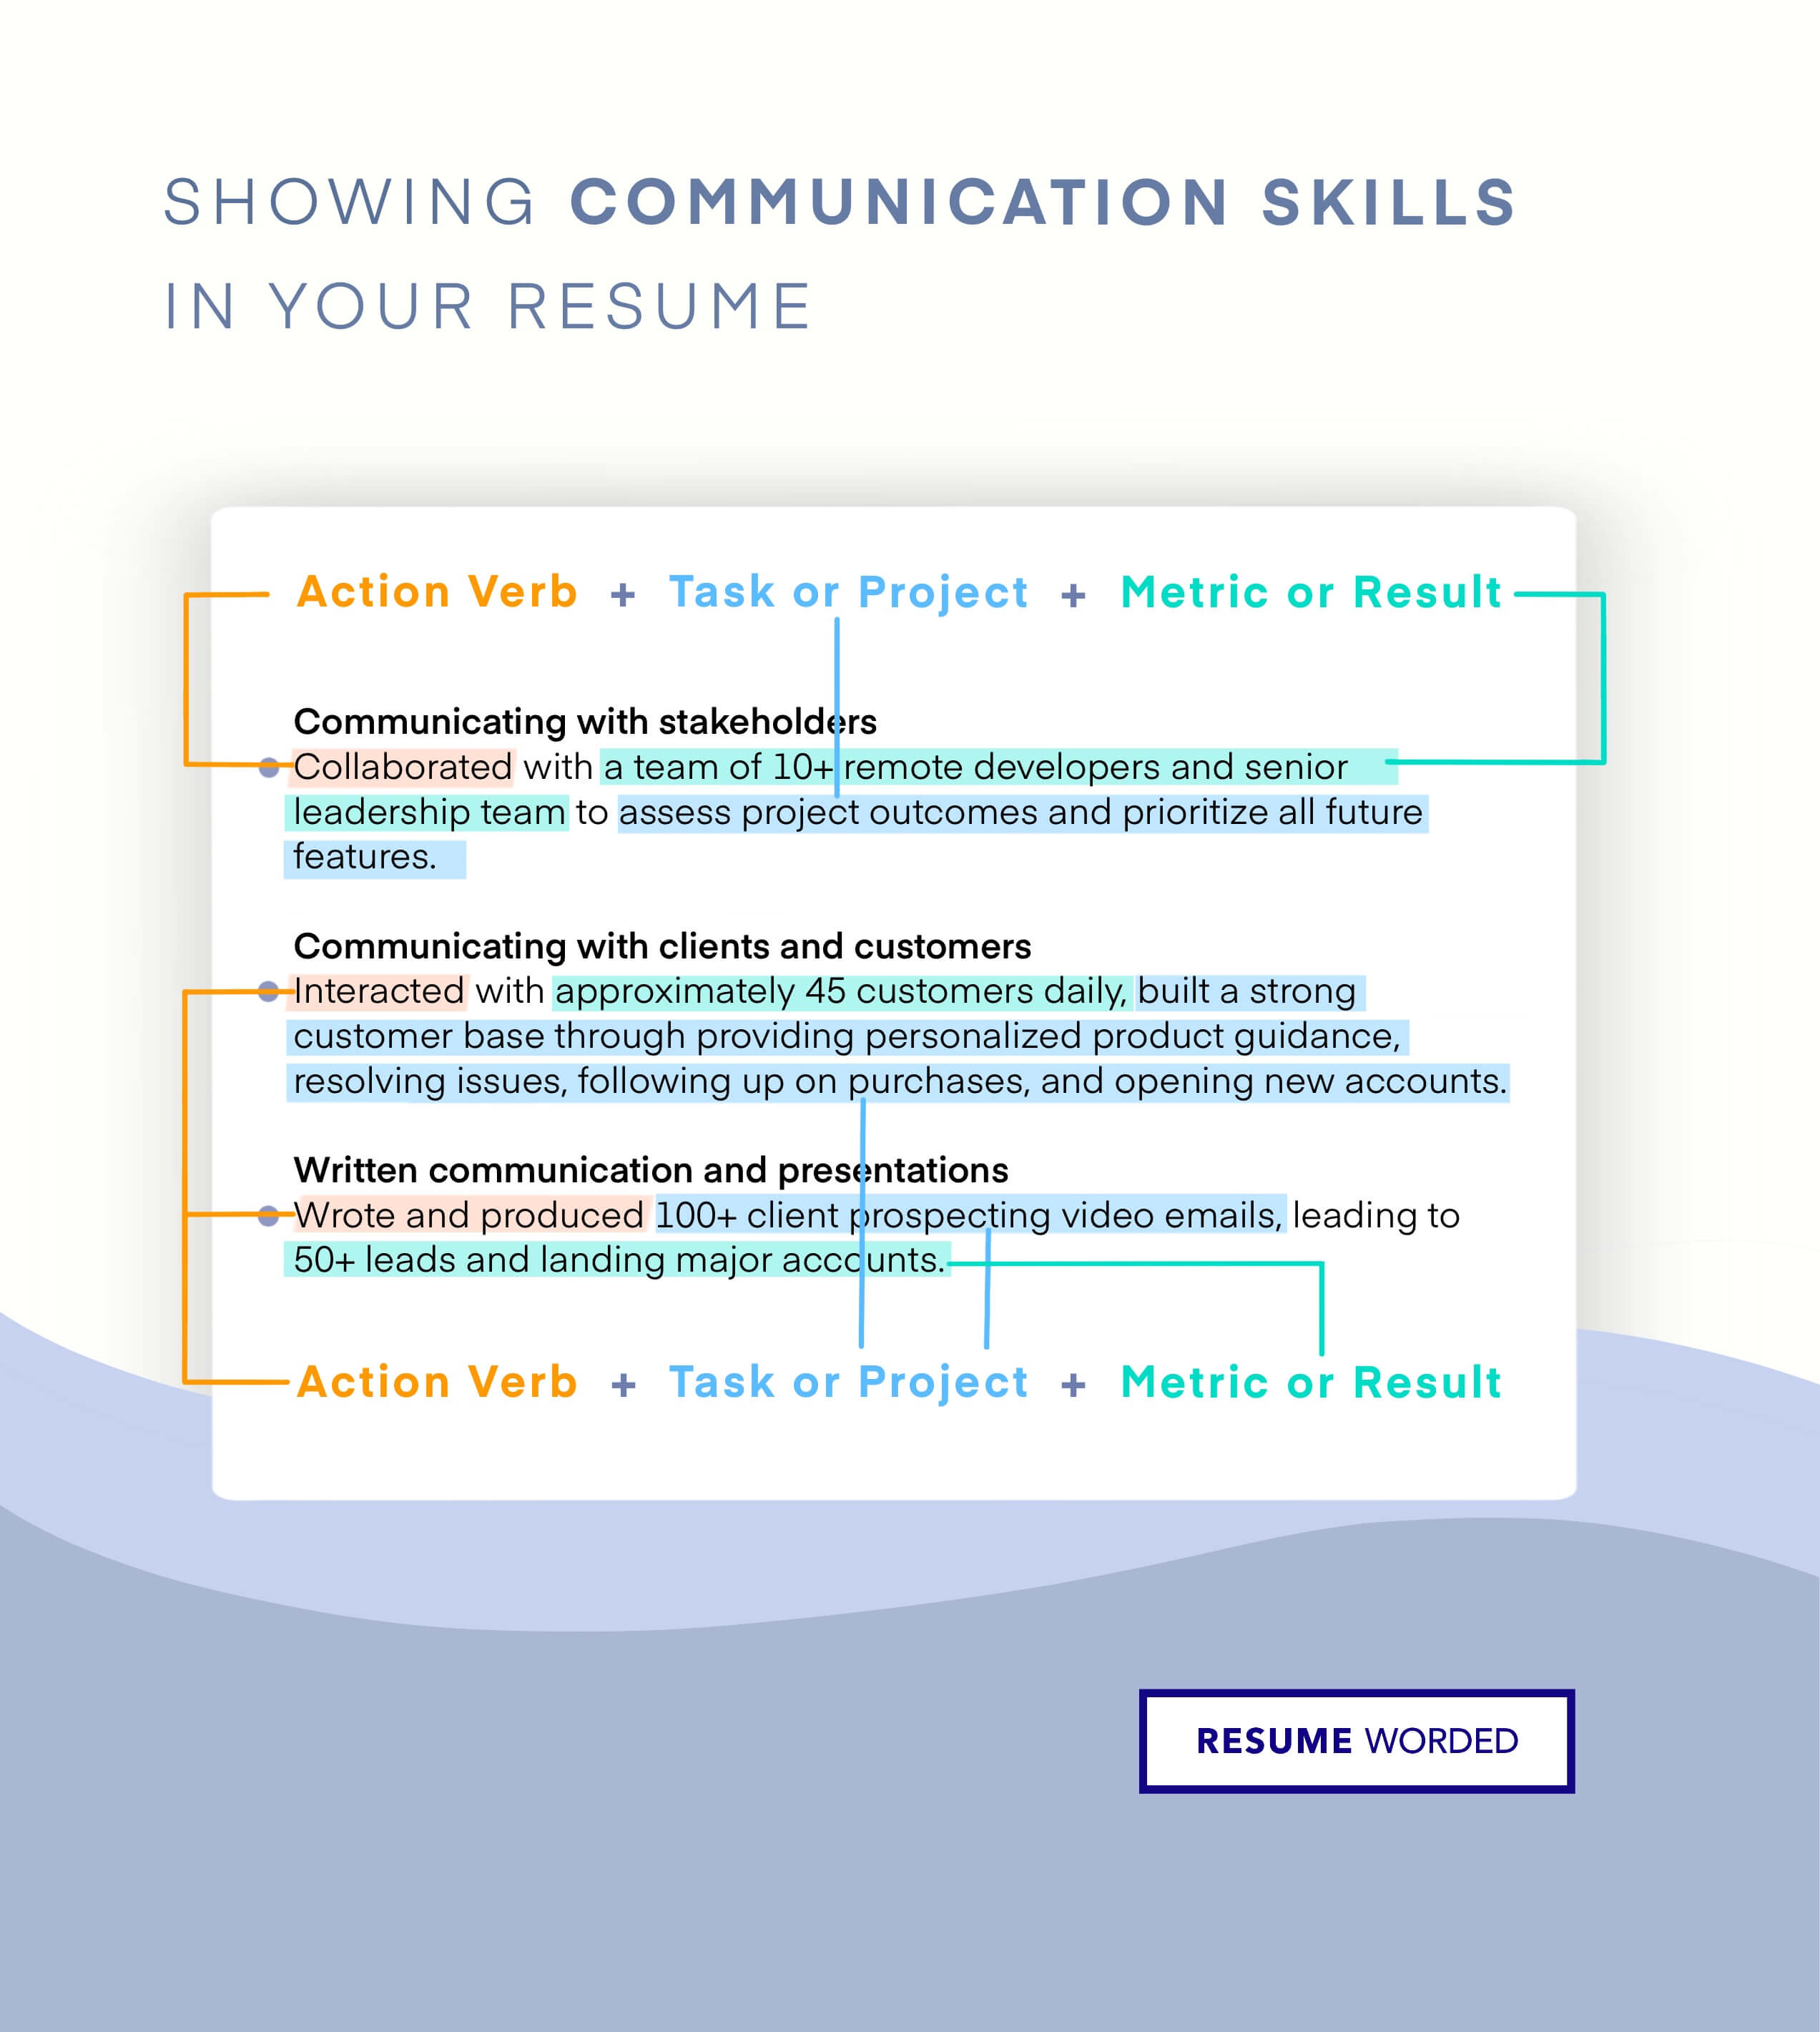 Illustrate your leadership and communication skills - Senior Software Architect CV